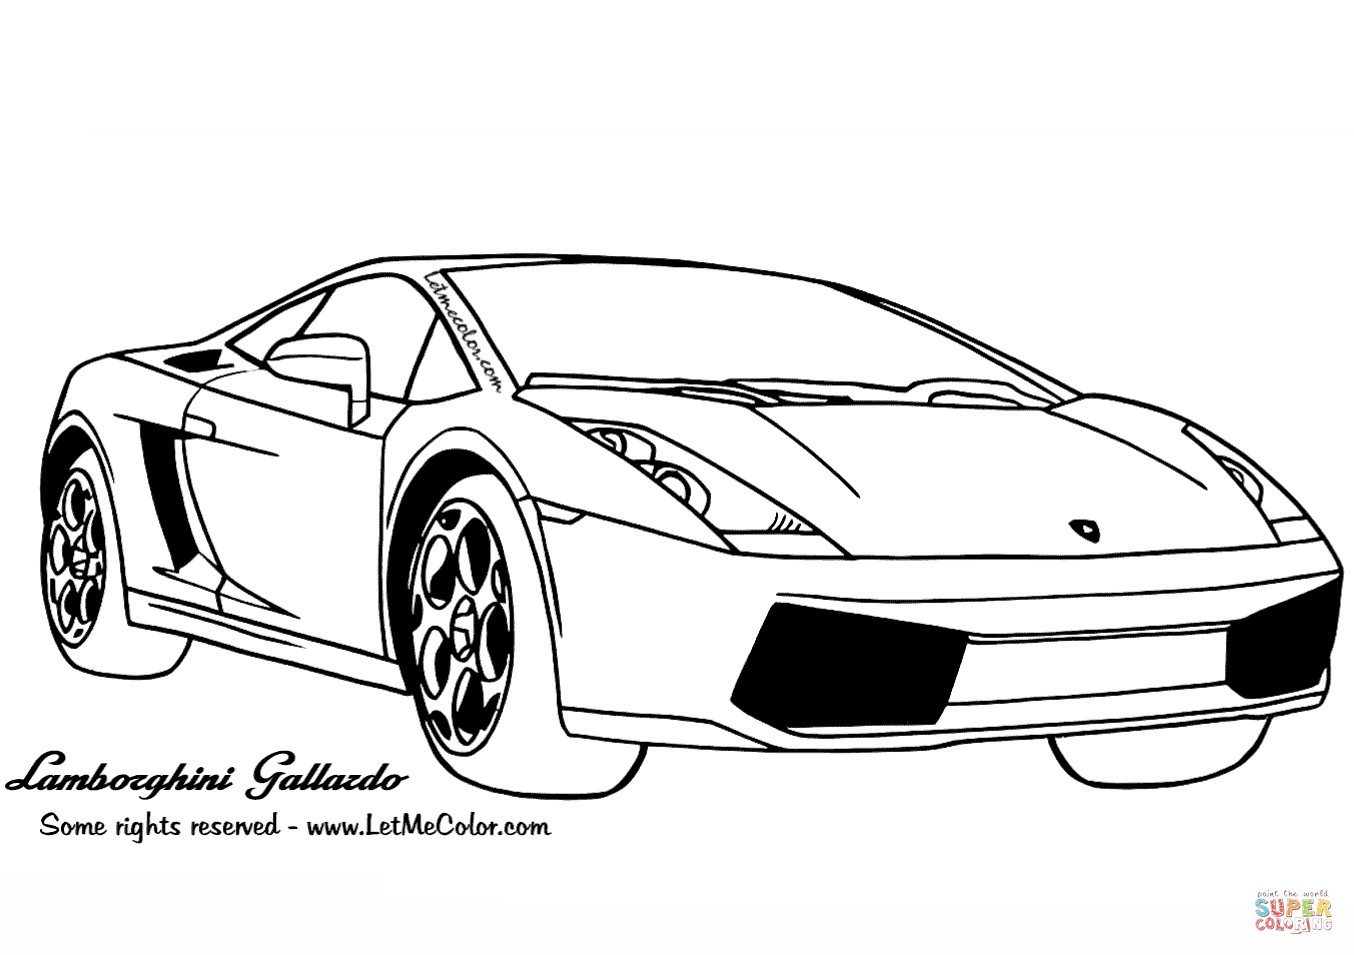 Lamborghini Free Coloring Pages For Boys
 Lamborghini Gallardo coloring page